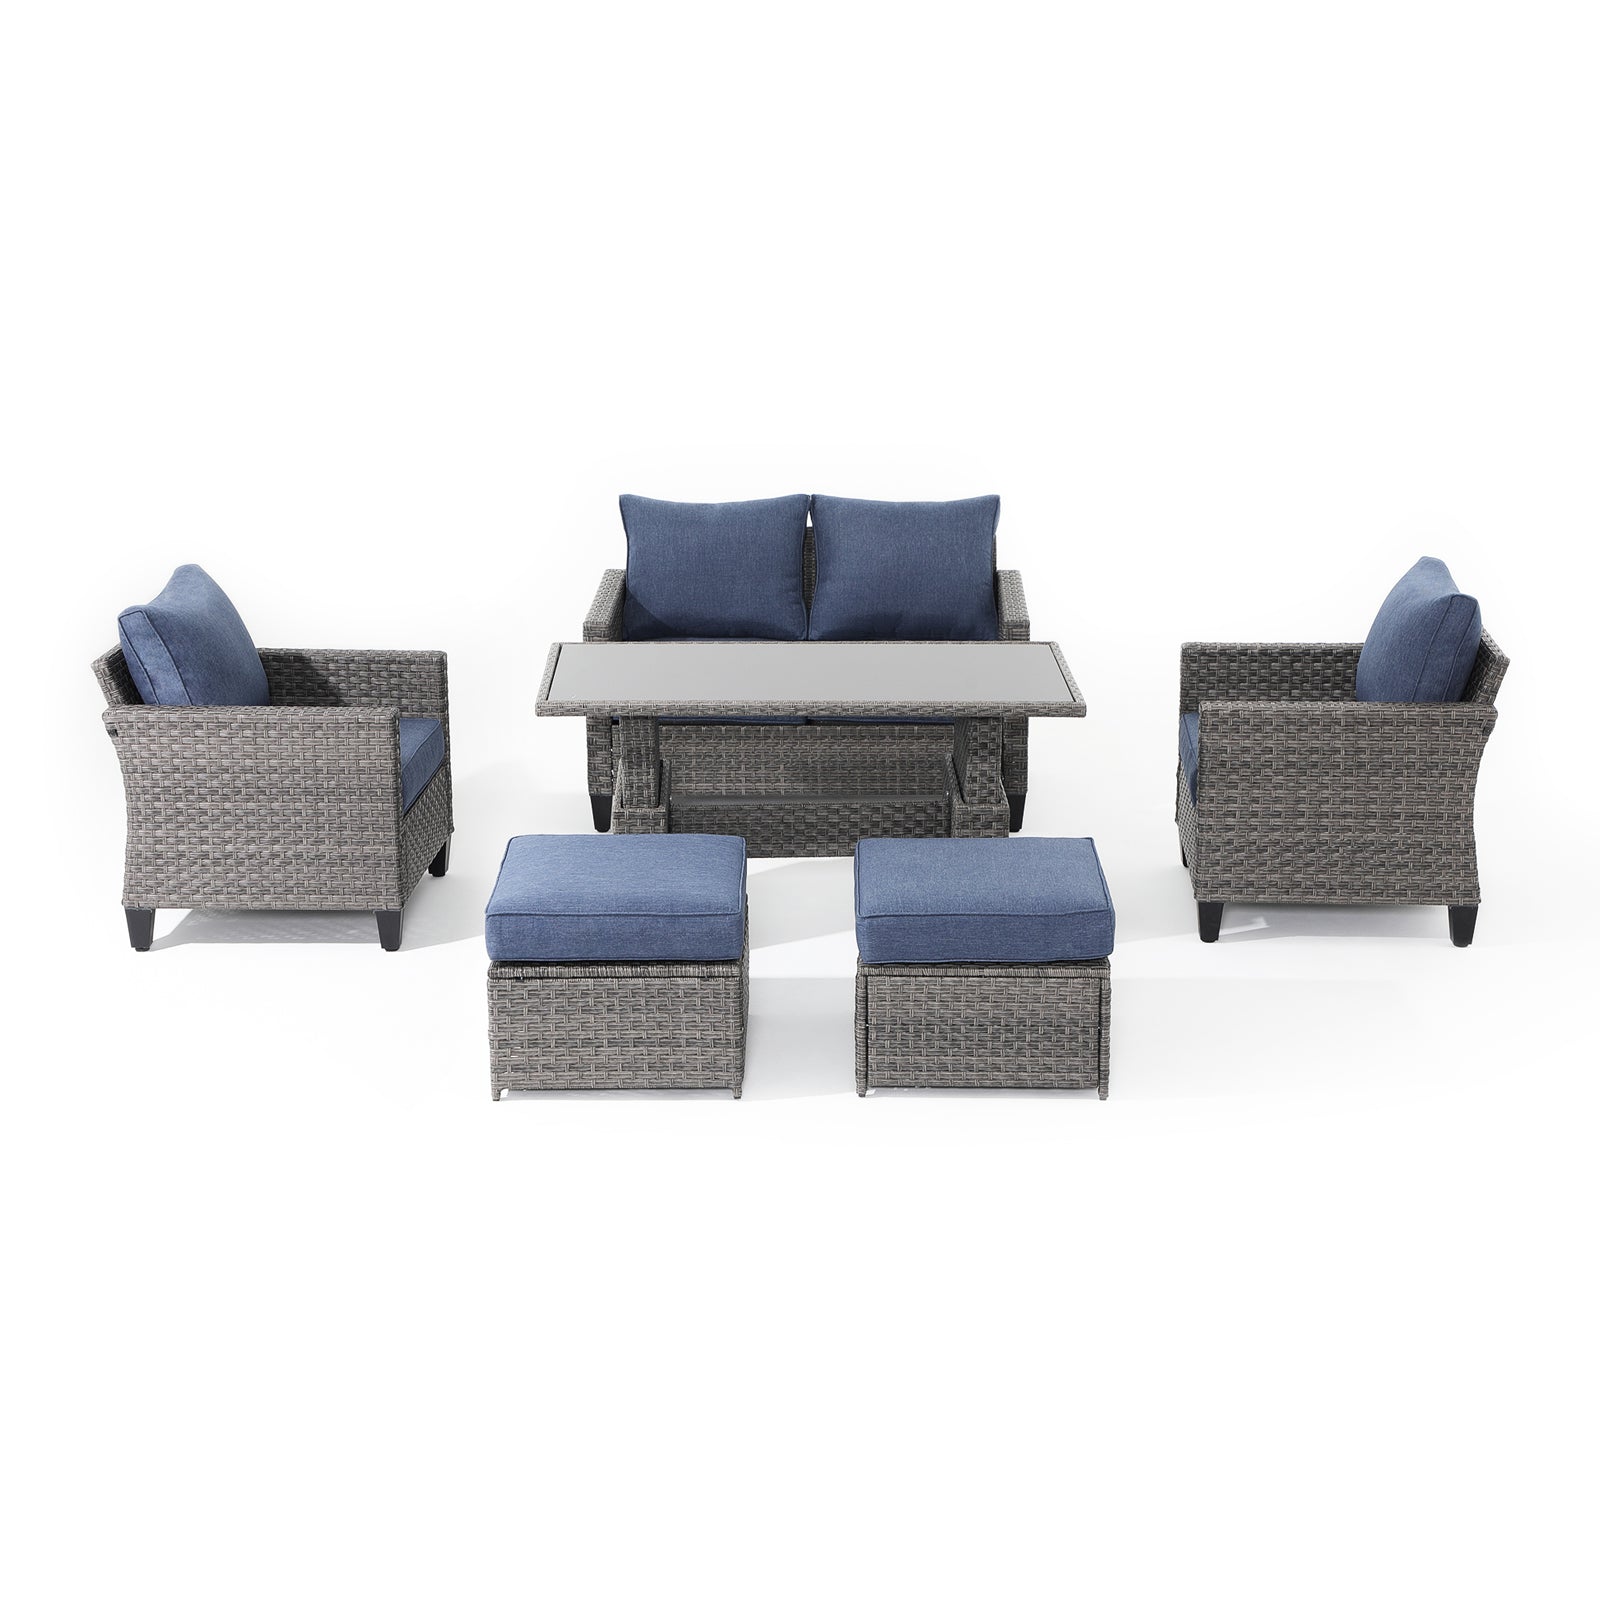 Aiya Modern Wicker Outdoor Furniture, patio conversation set with lift top table - Jardina Furniture